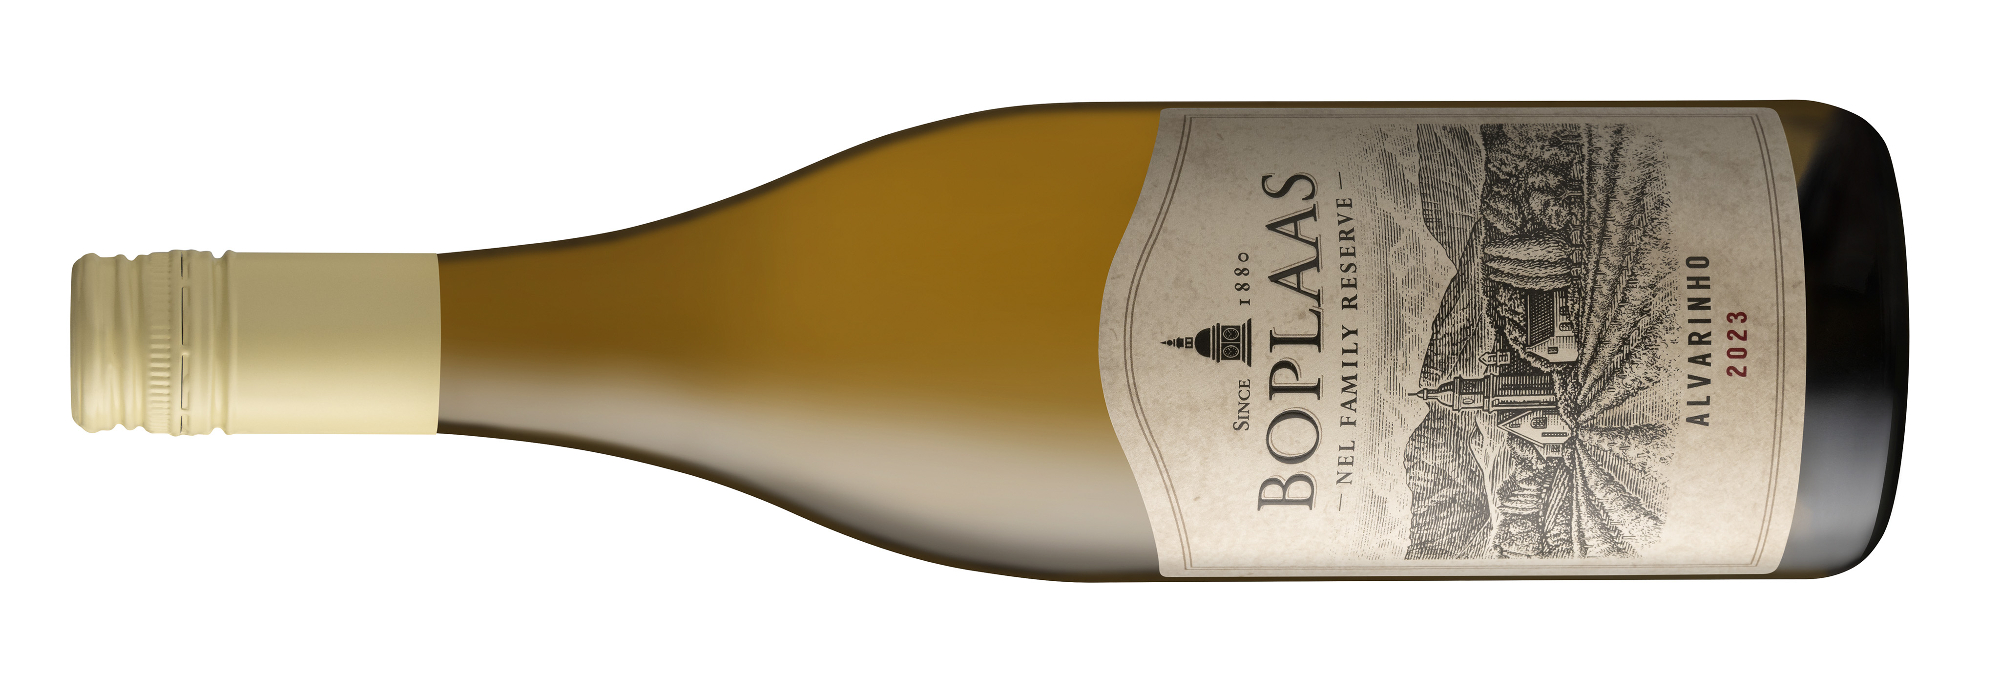 New Boplaas Alvarinho Re-affirms The Calitsdorp Winery’s Reputation For Innovation photo